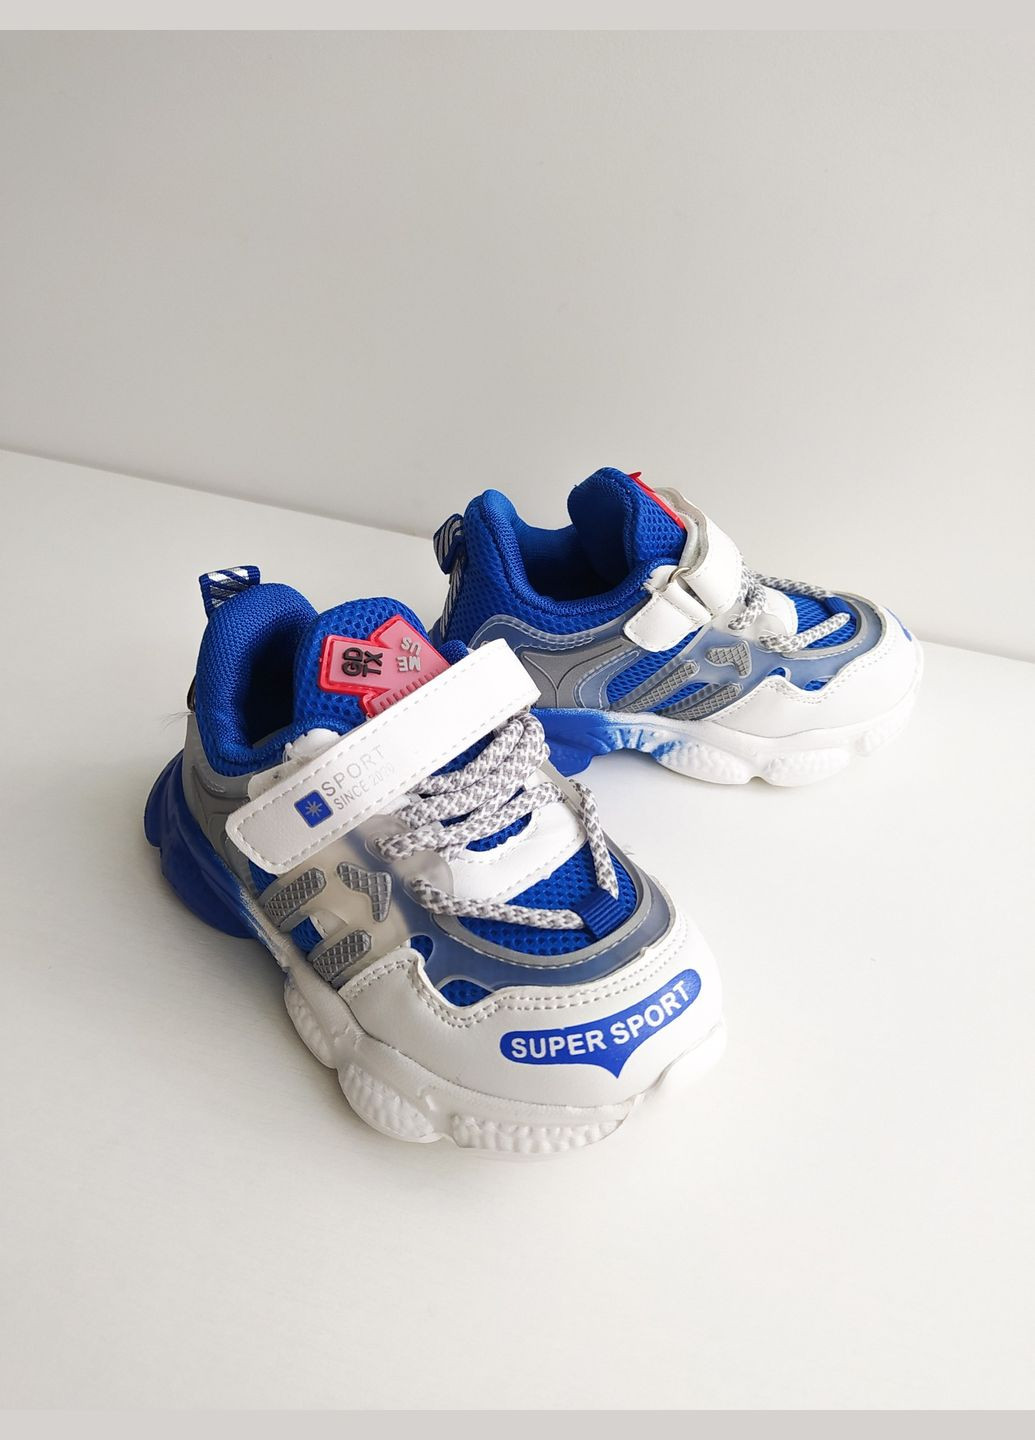 Синие детские кроссовки 21 г 13,5 см синий артикул к170 Kimbo-O